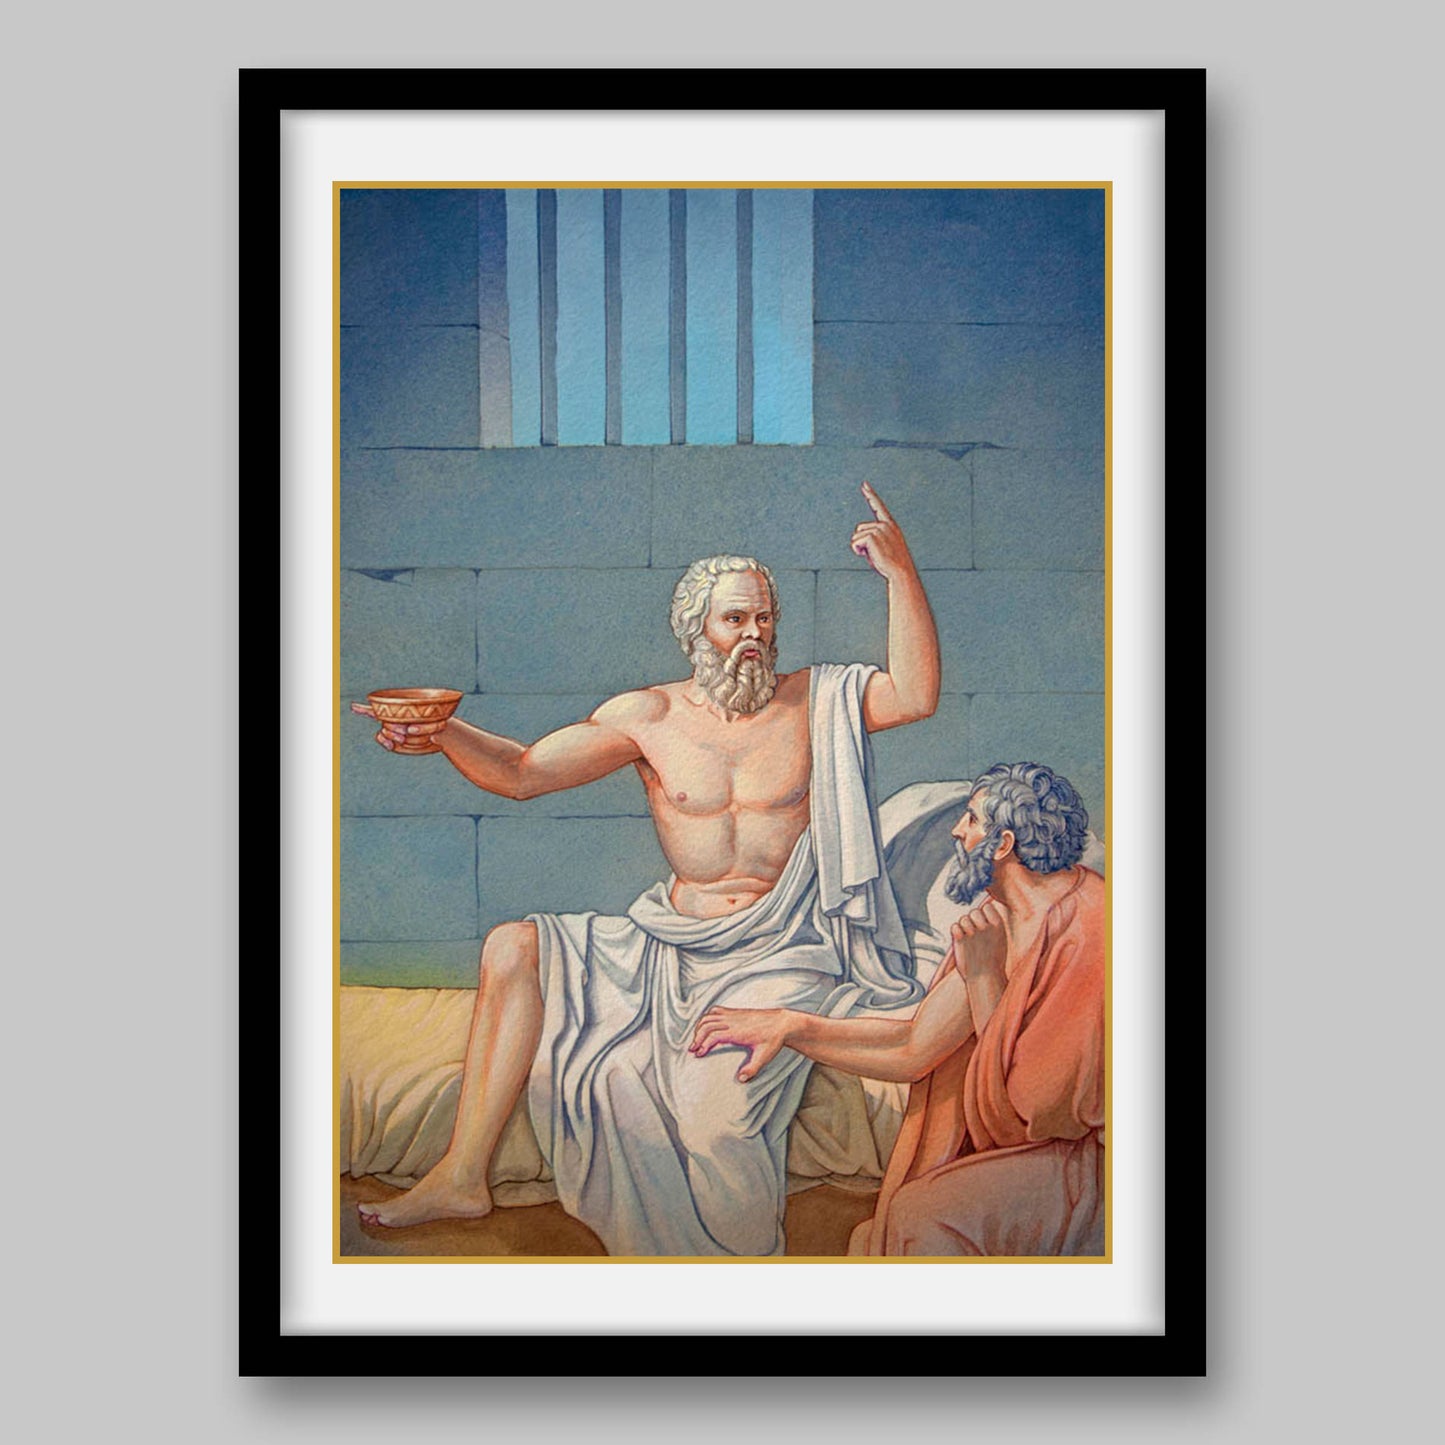 Greek Philosopher Socrates - High Quality Print of Artwork by Pieter Weltevrede